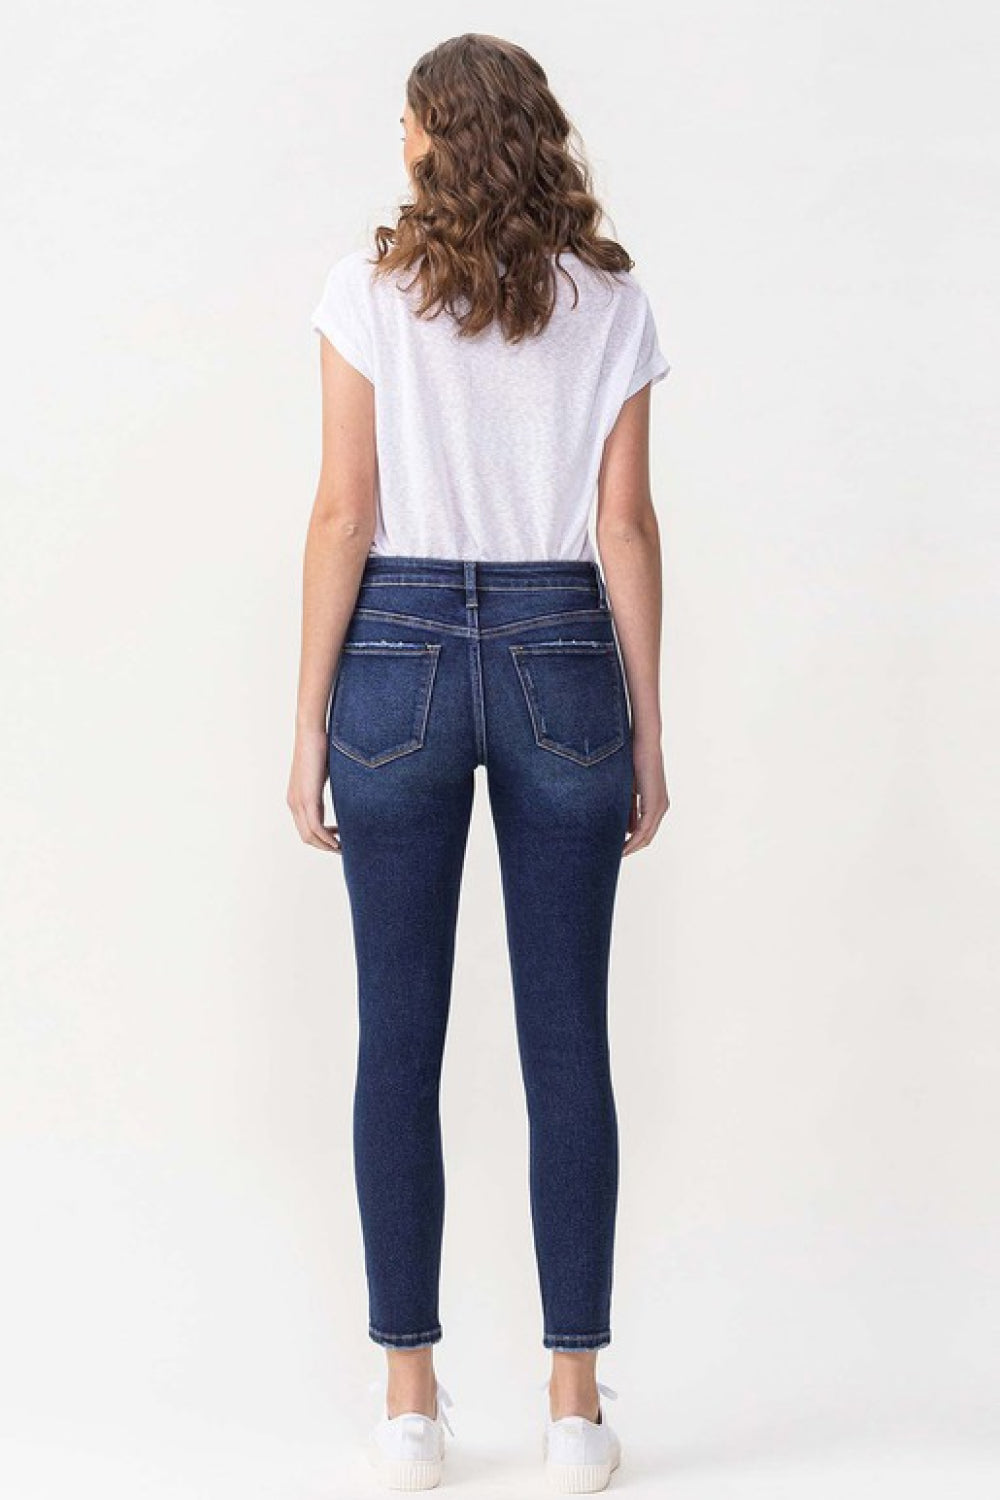 LOVERVET by Vervet Full Size Chelsea Midrise Crop Skinny Jeans in Dark Wash